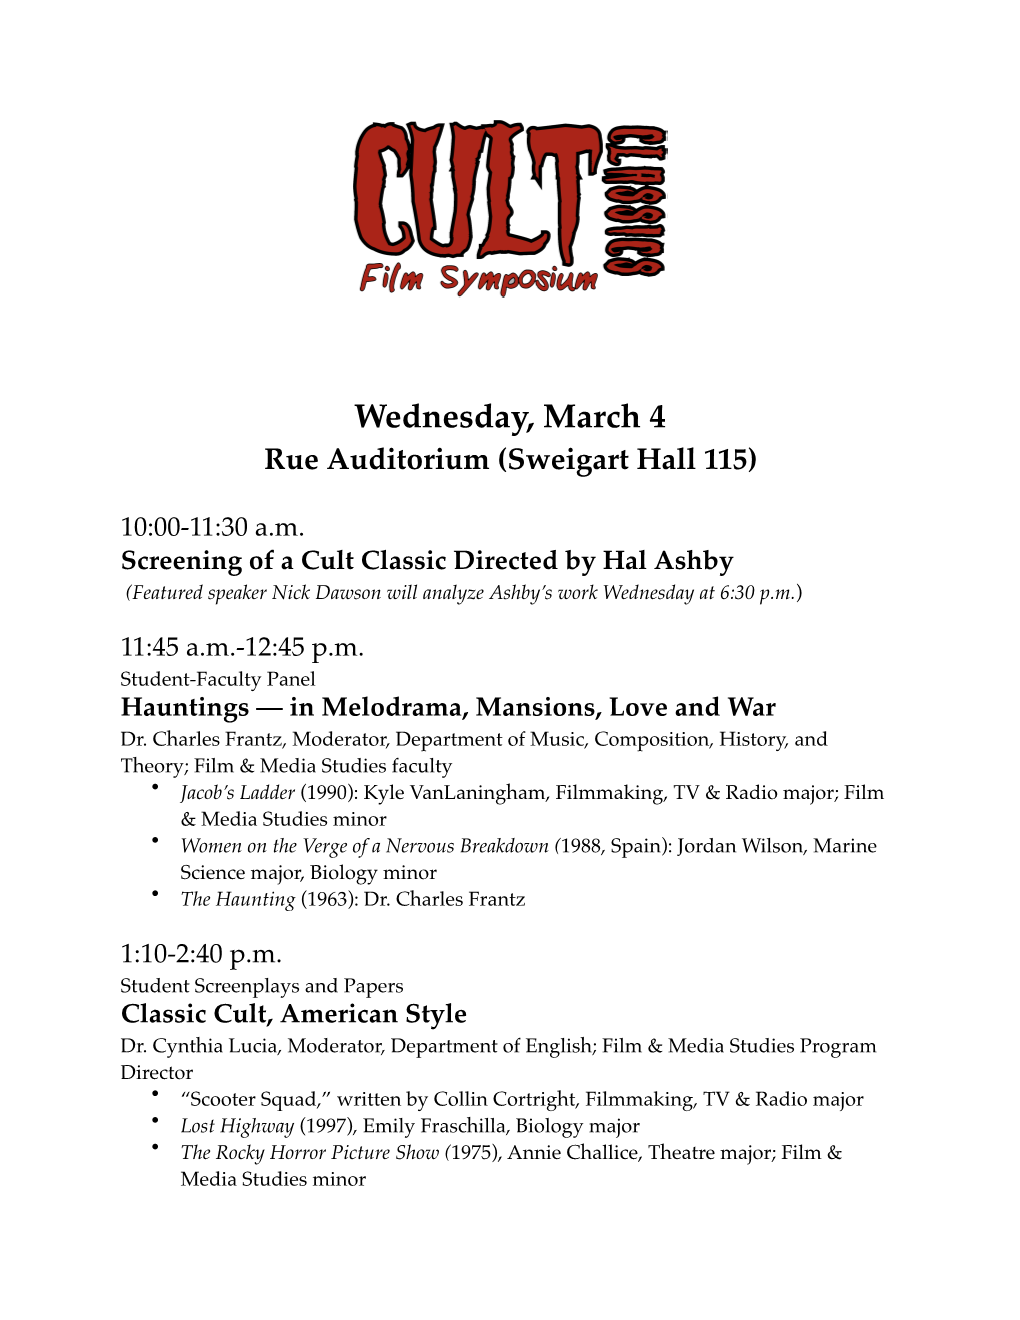 Wednesday, March 4 Rue Auditorium (Sweigart Hall 115)